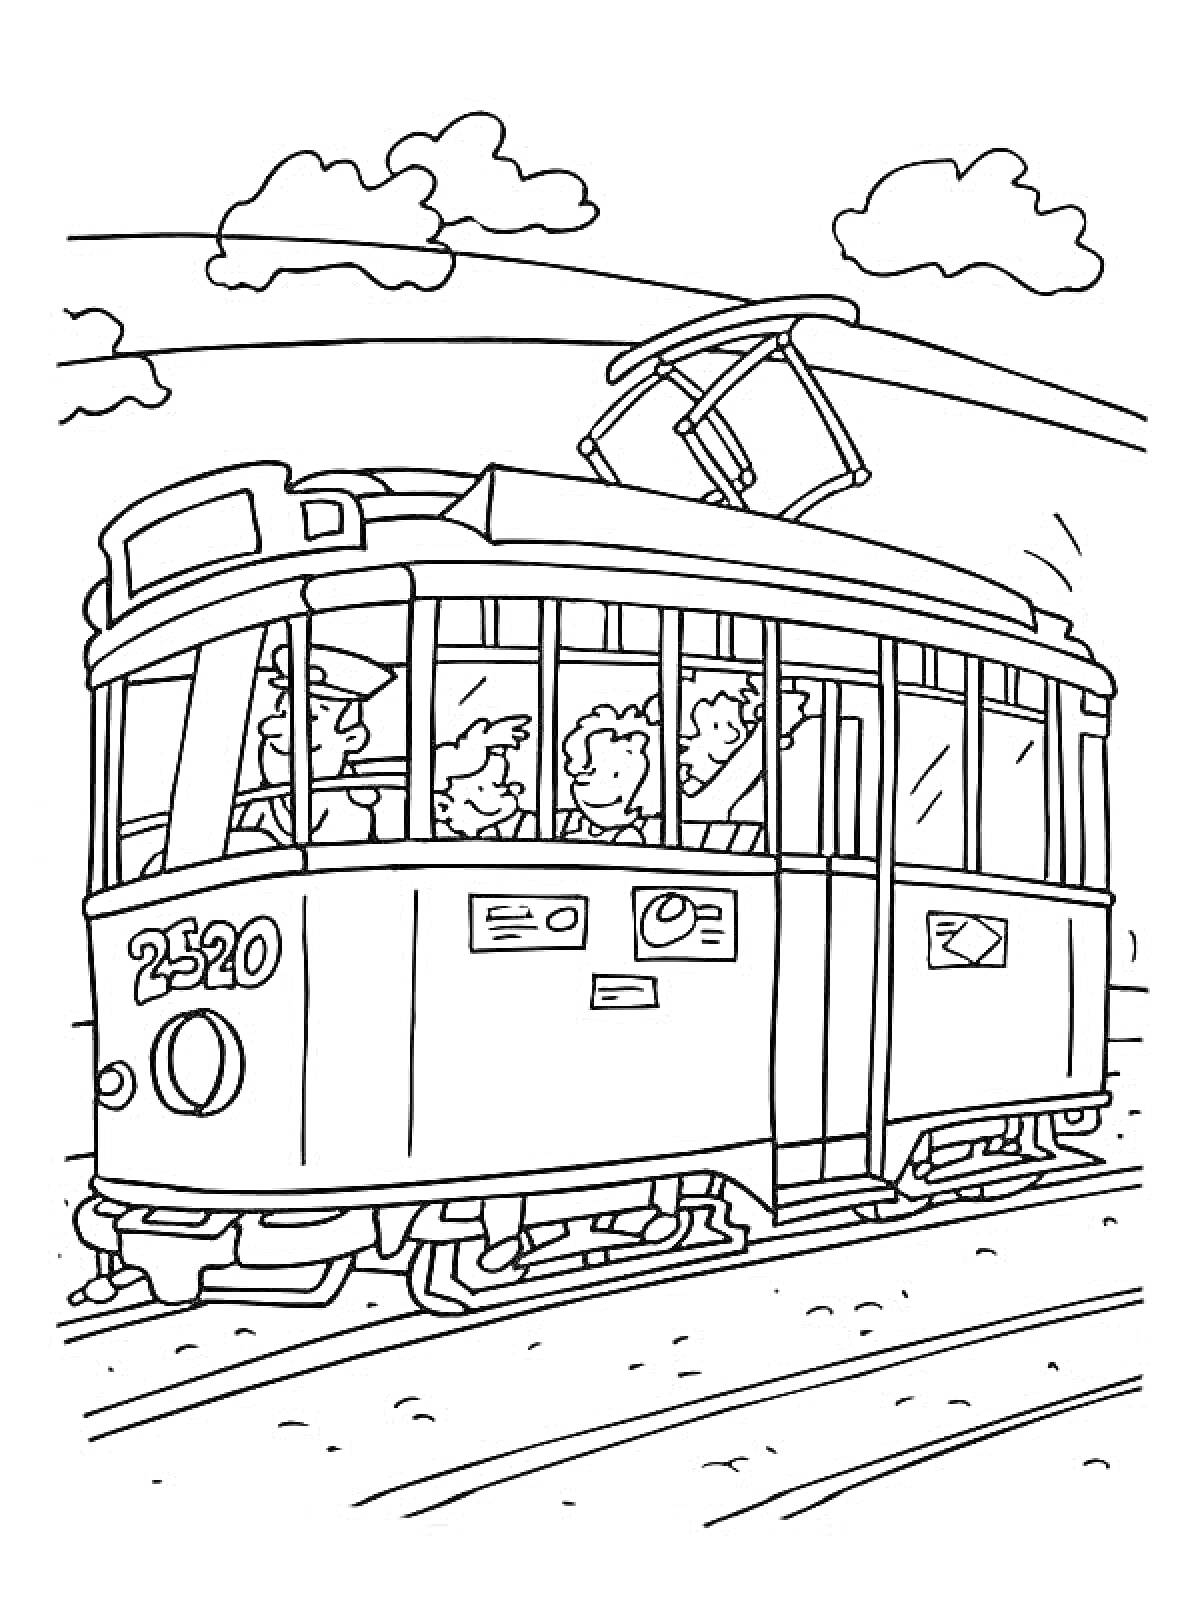 Трамвай с пассажирами на рельсах с водителем и облаками на заднем плане